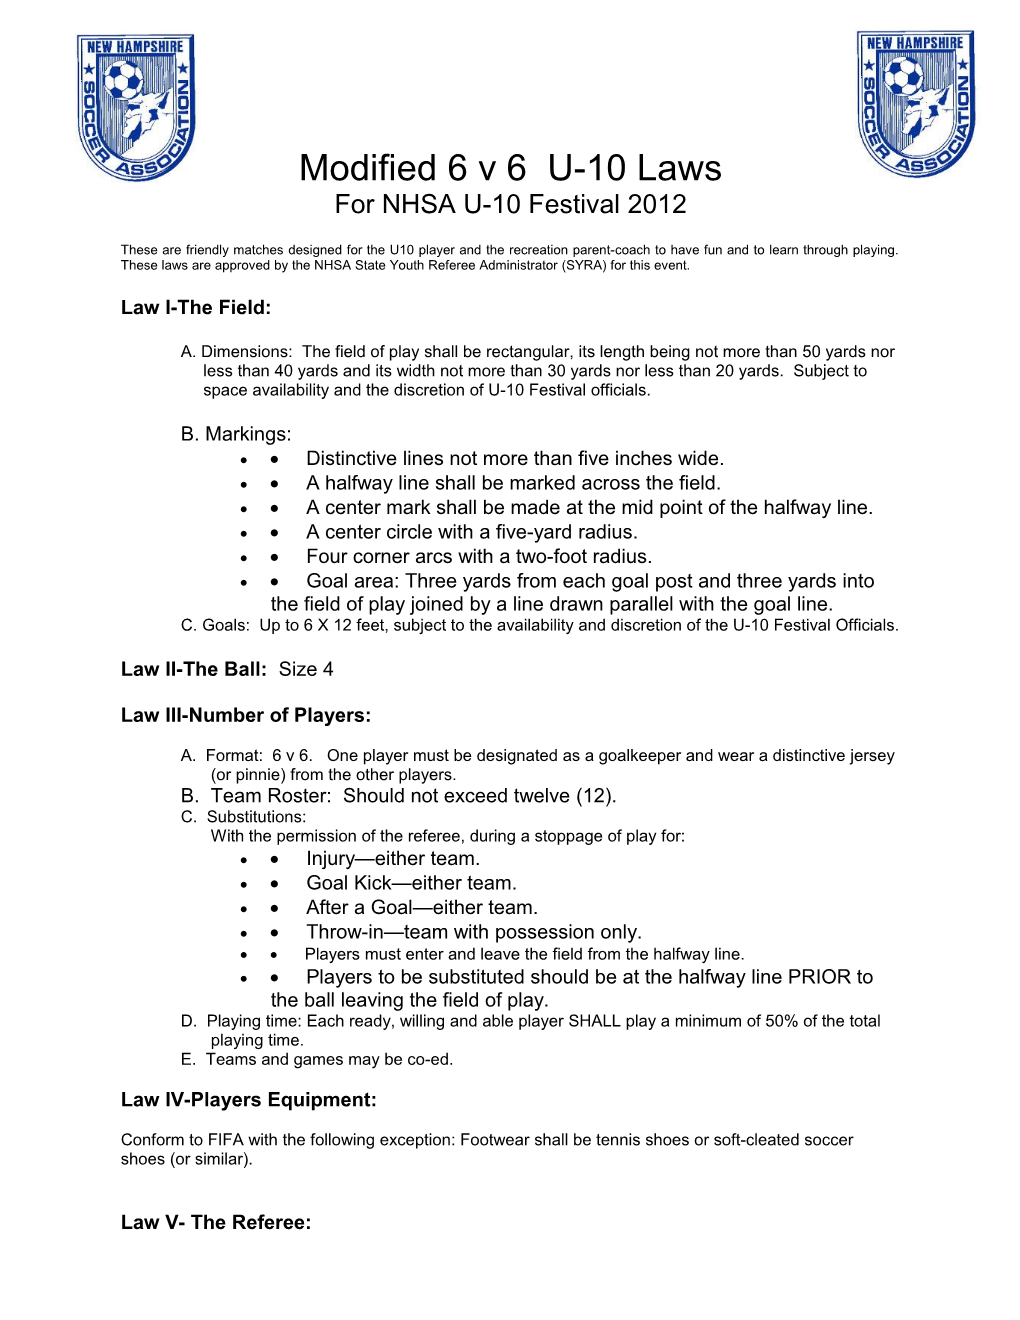 Modified 6 V 6 U-10 Laws